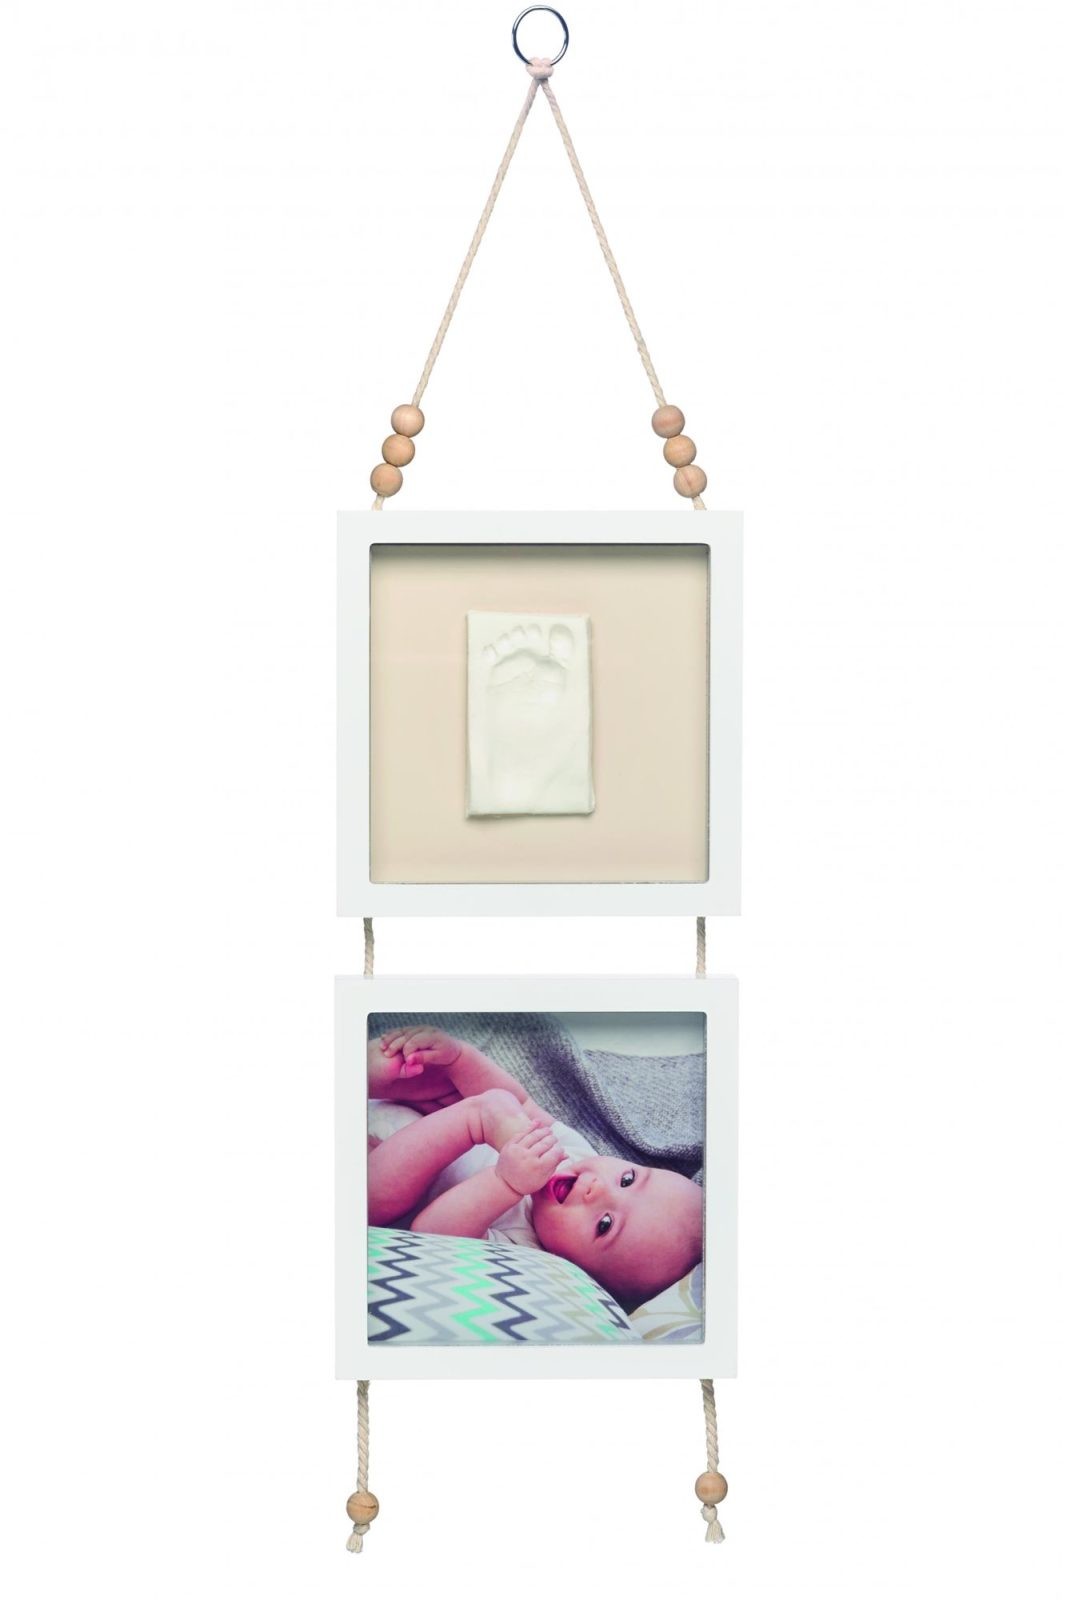 Sada na otisky Baby Art Hanging Frame